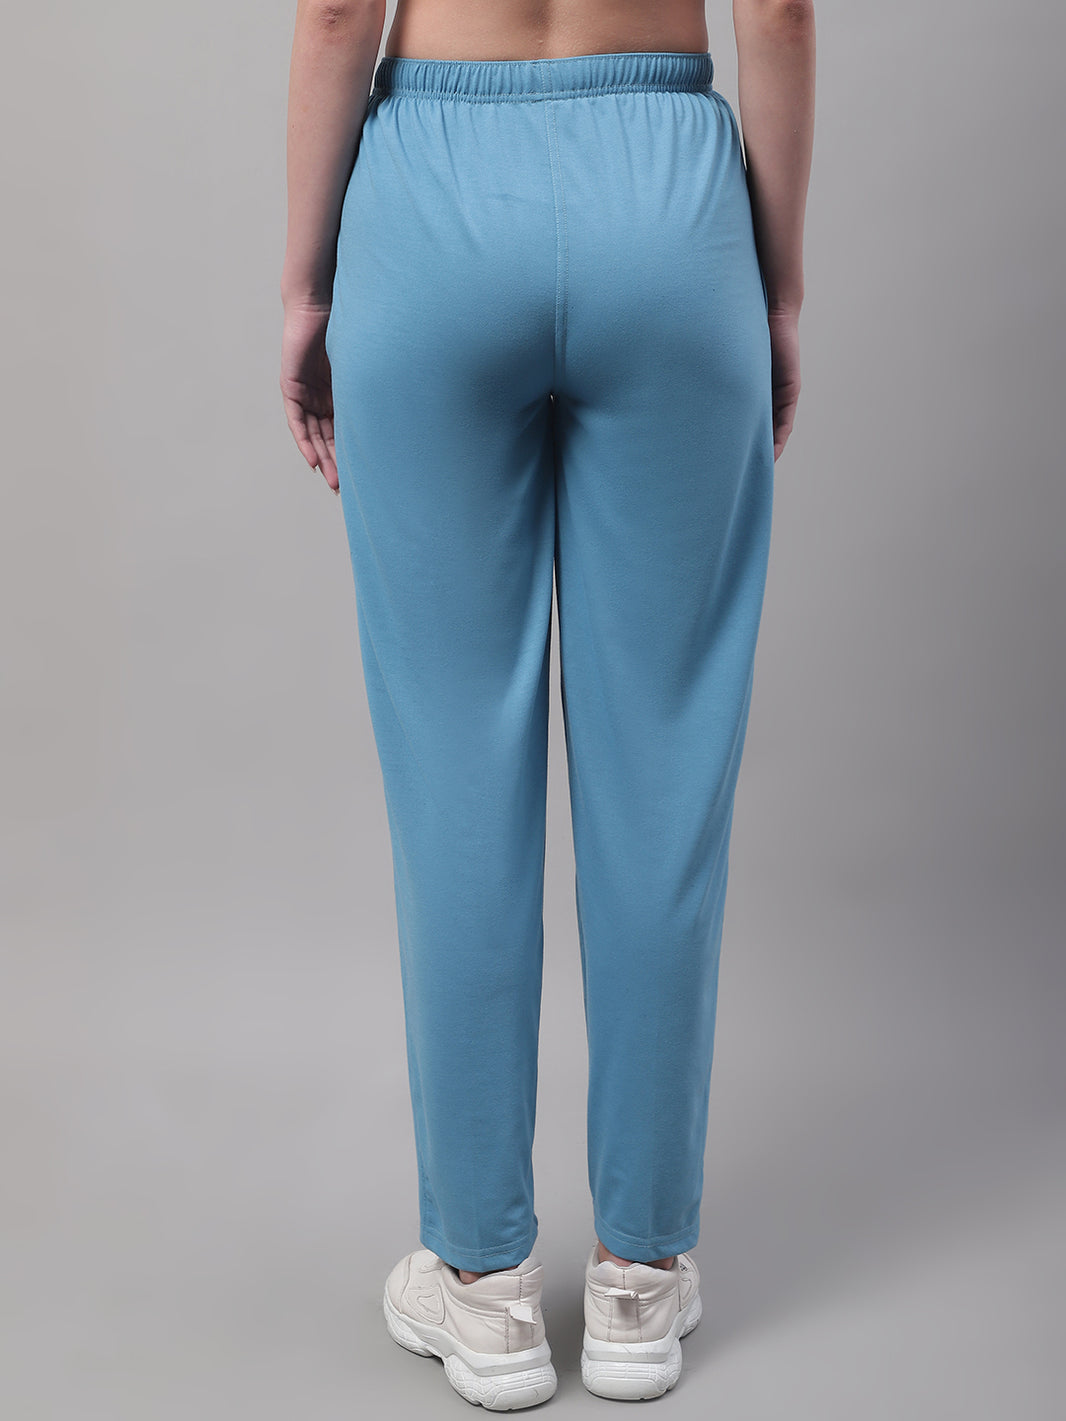 Vimal Jonney Blue Regular fit Cotton Trackpant for Women(Zip On 1 Side Pocket)